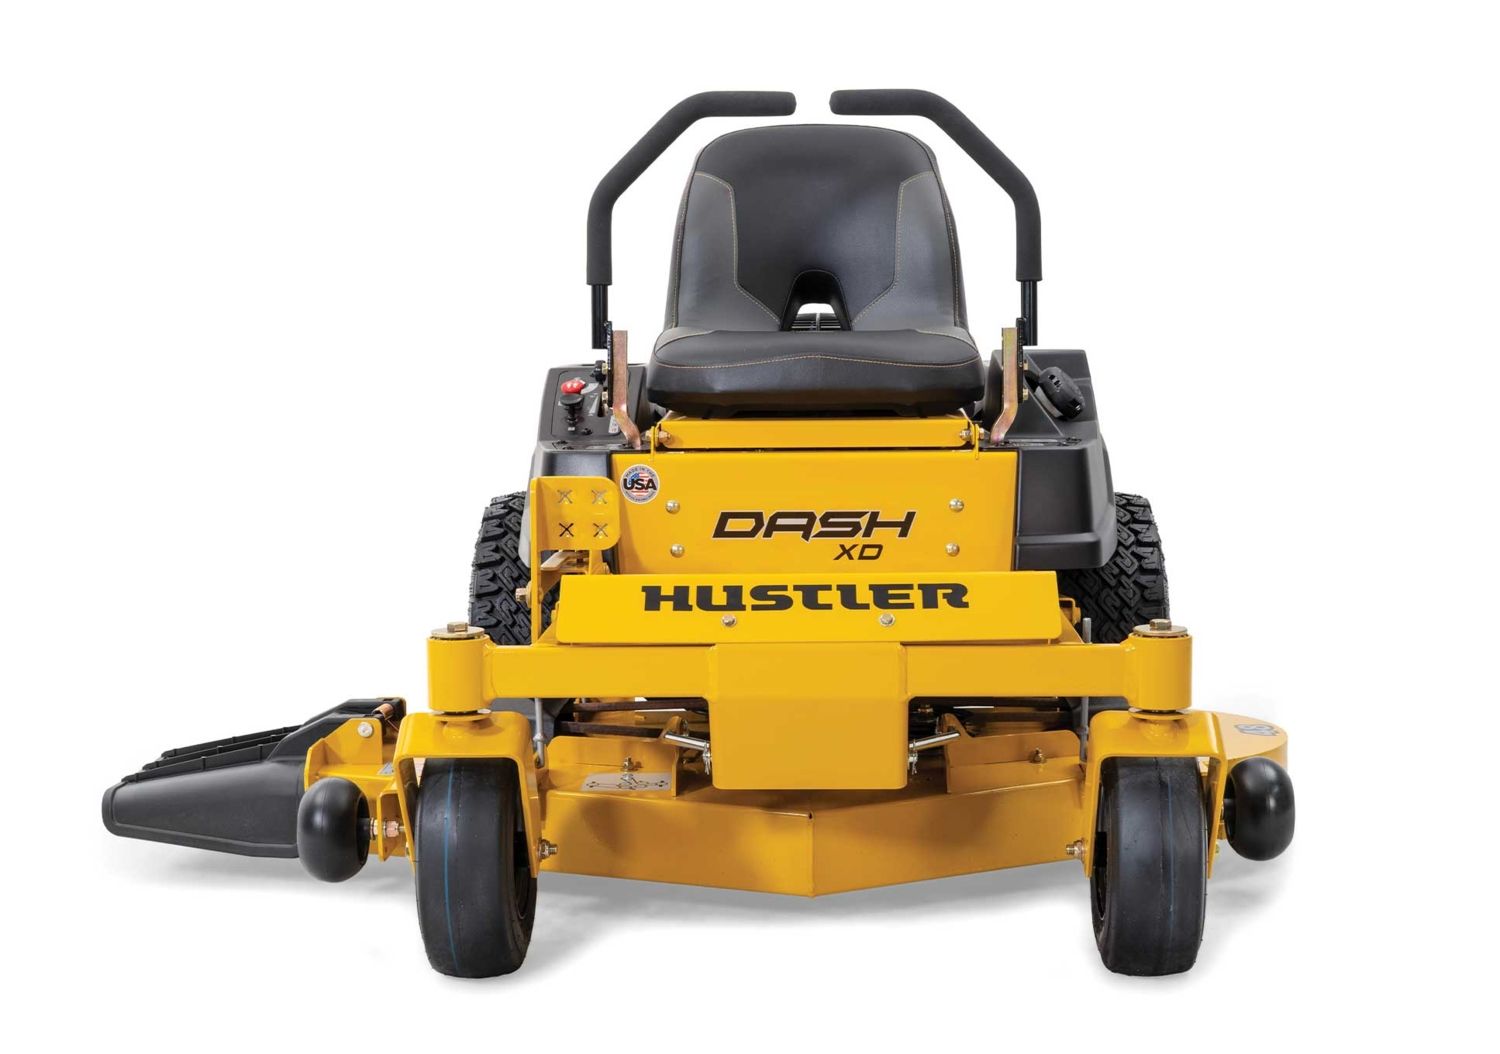 Image of the Hustler Dash XD 42" Zero Turn Lawn Mower